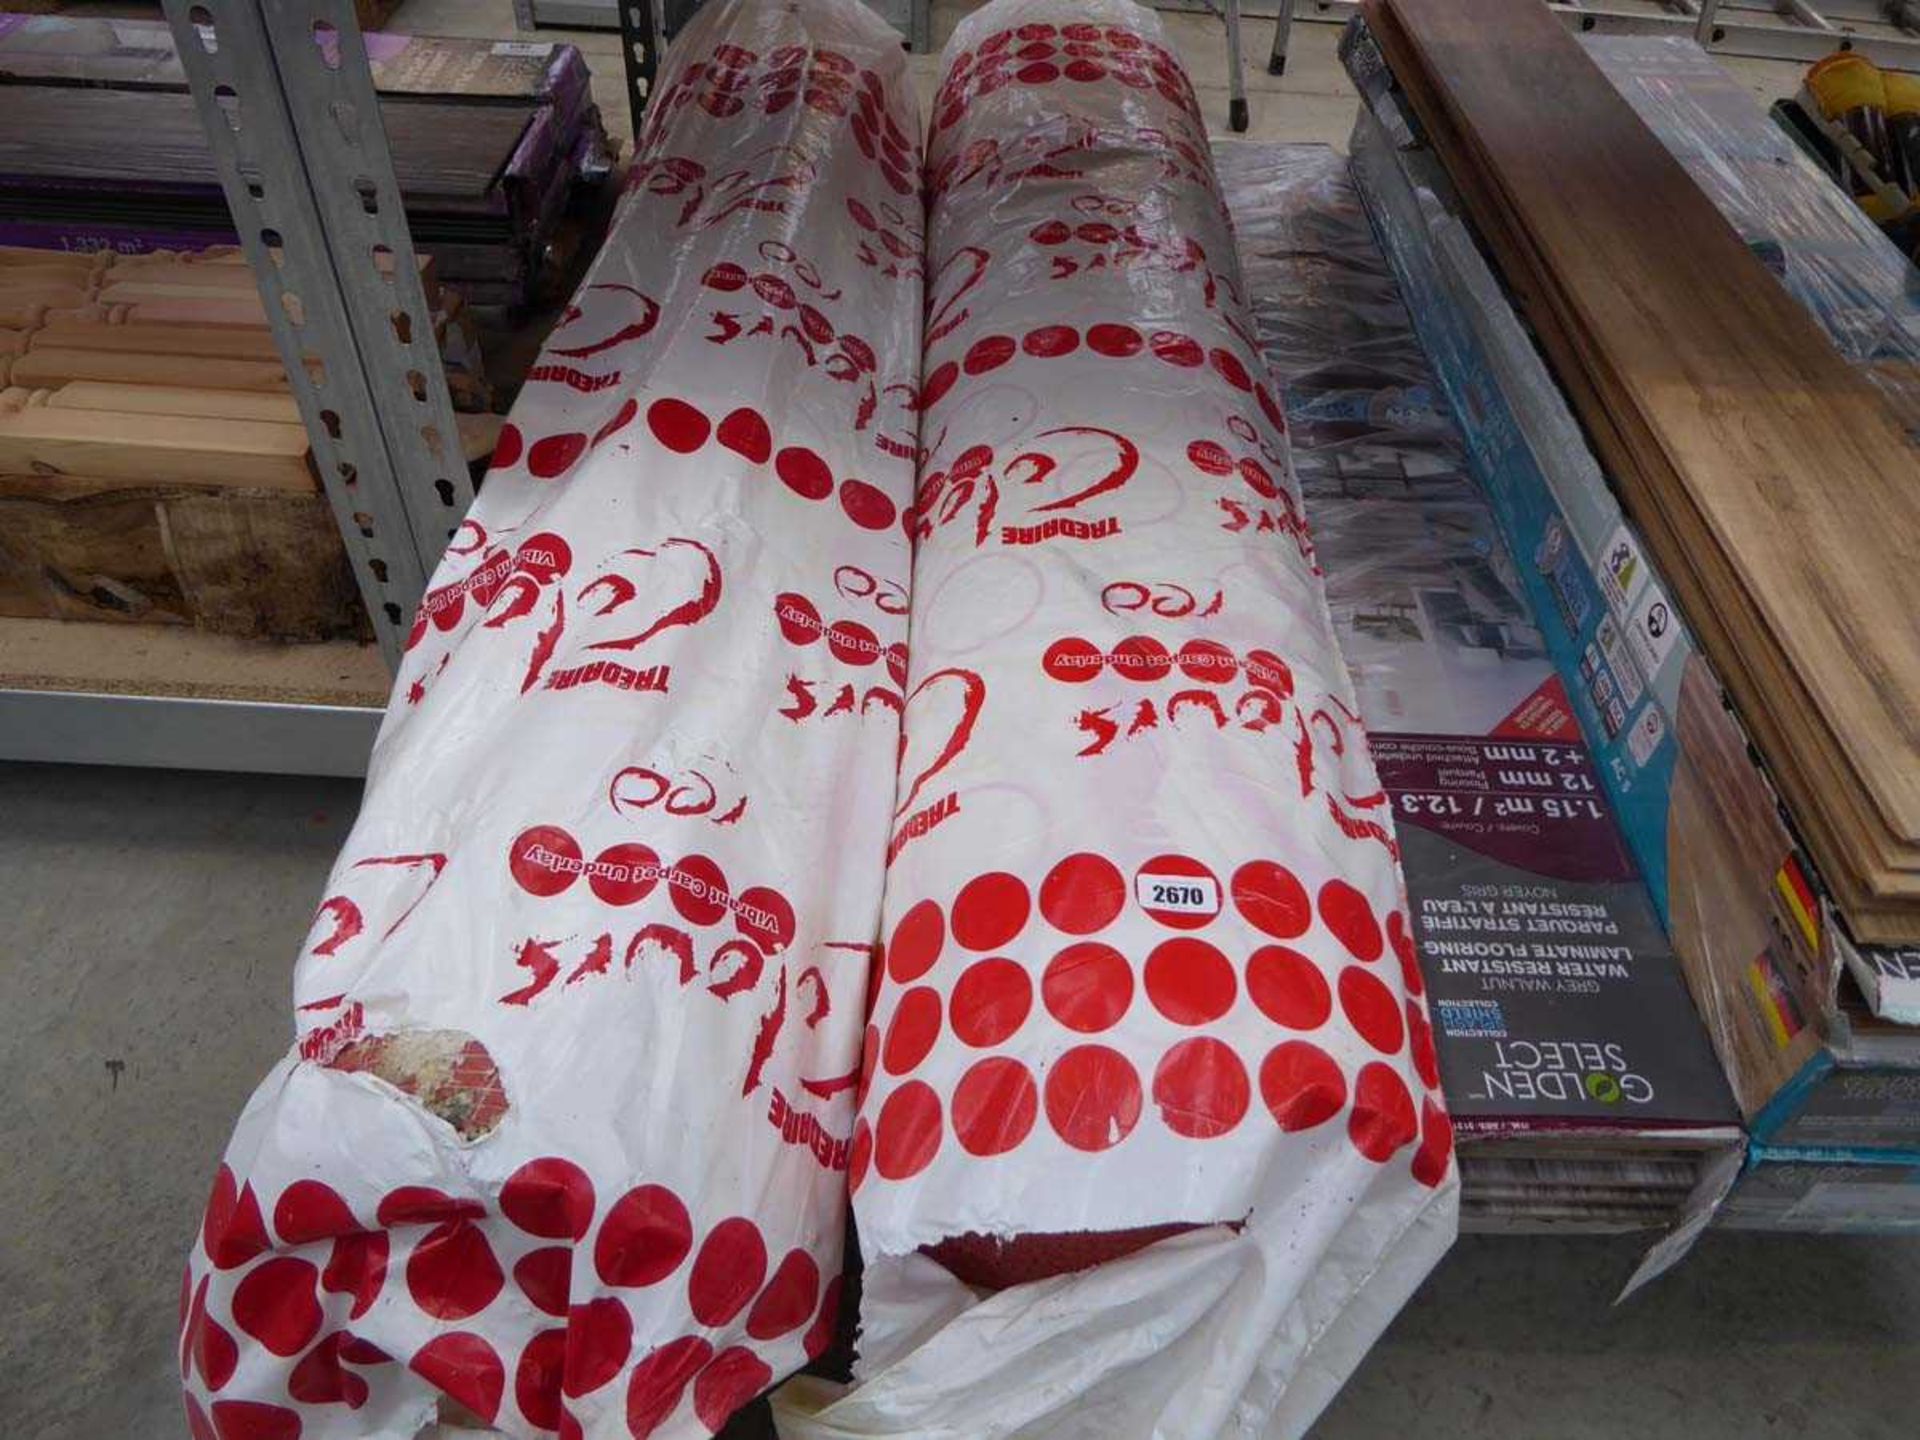 2 large rolls of carpet underlay